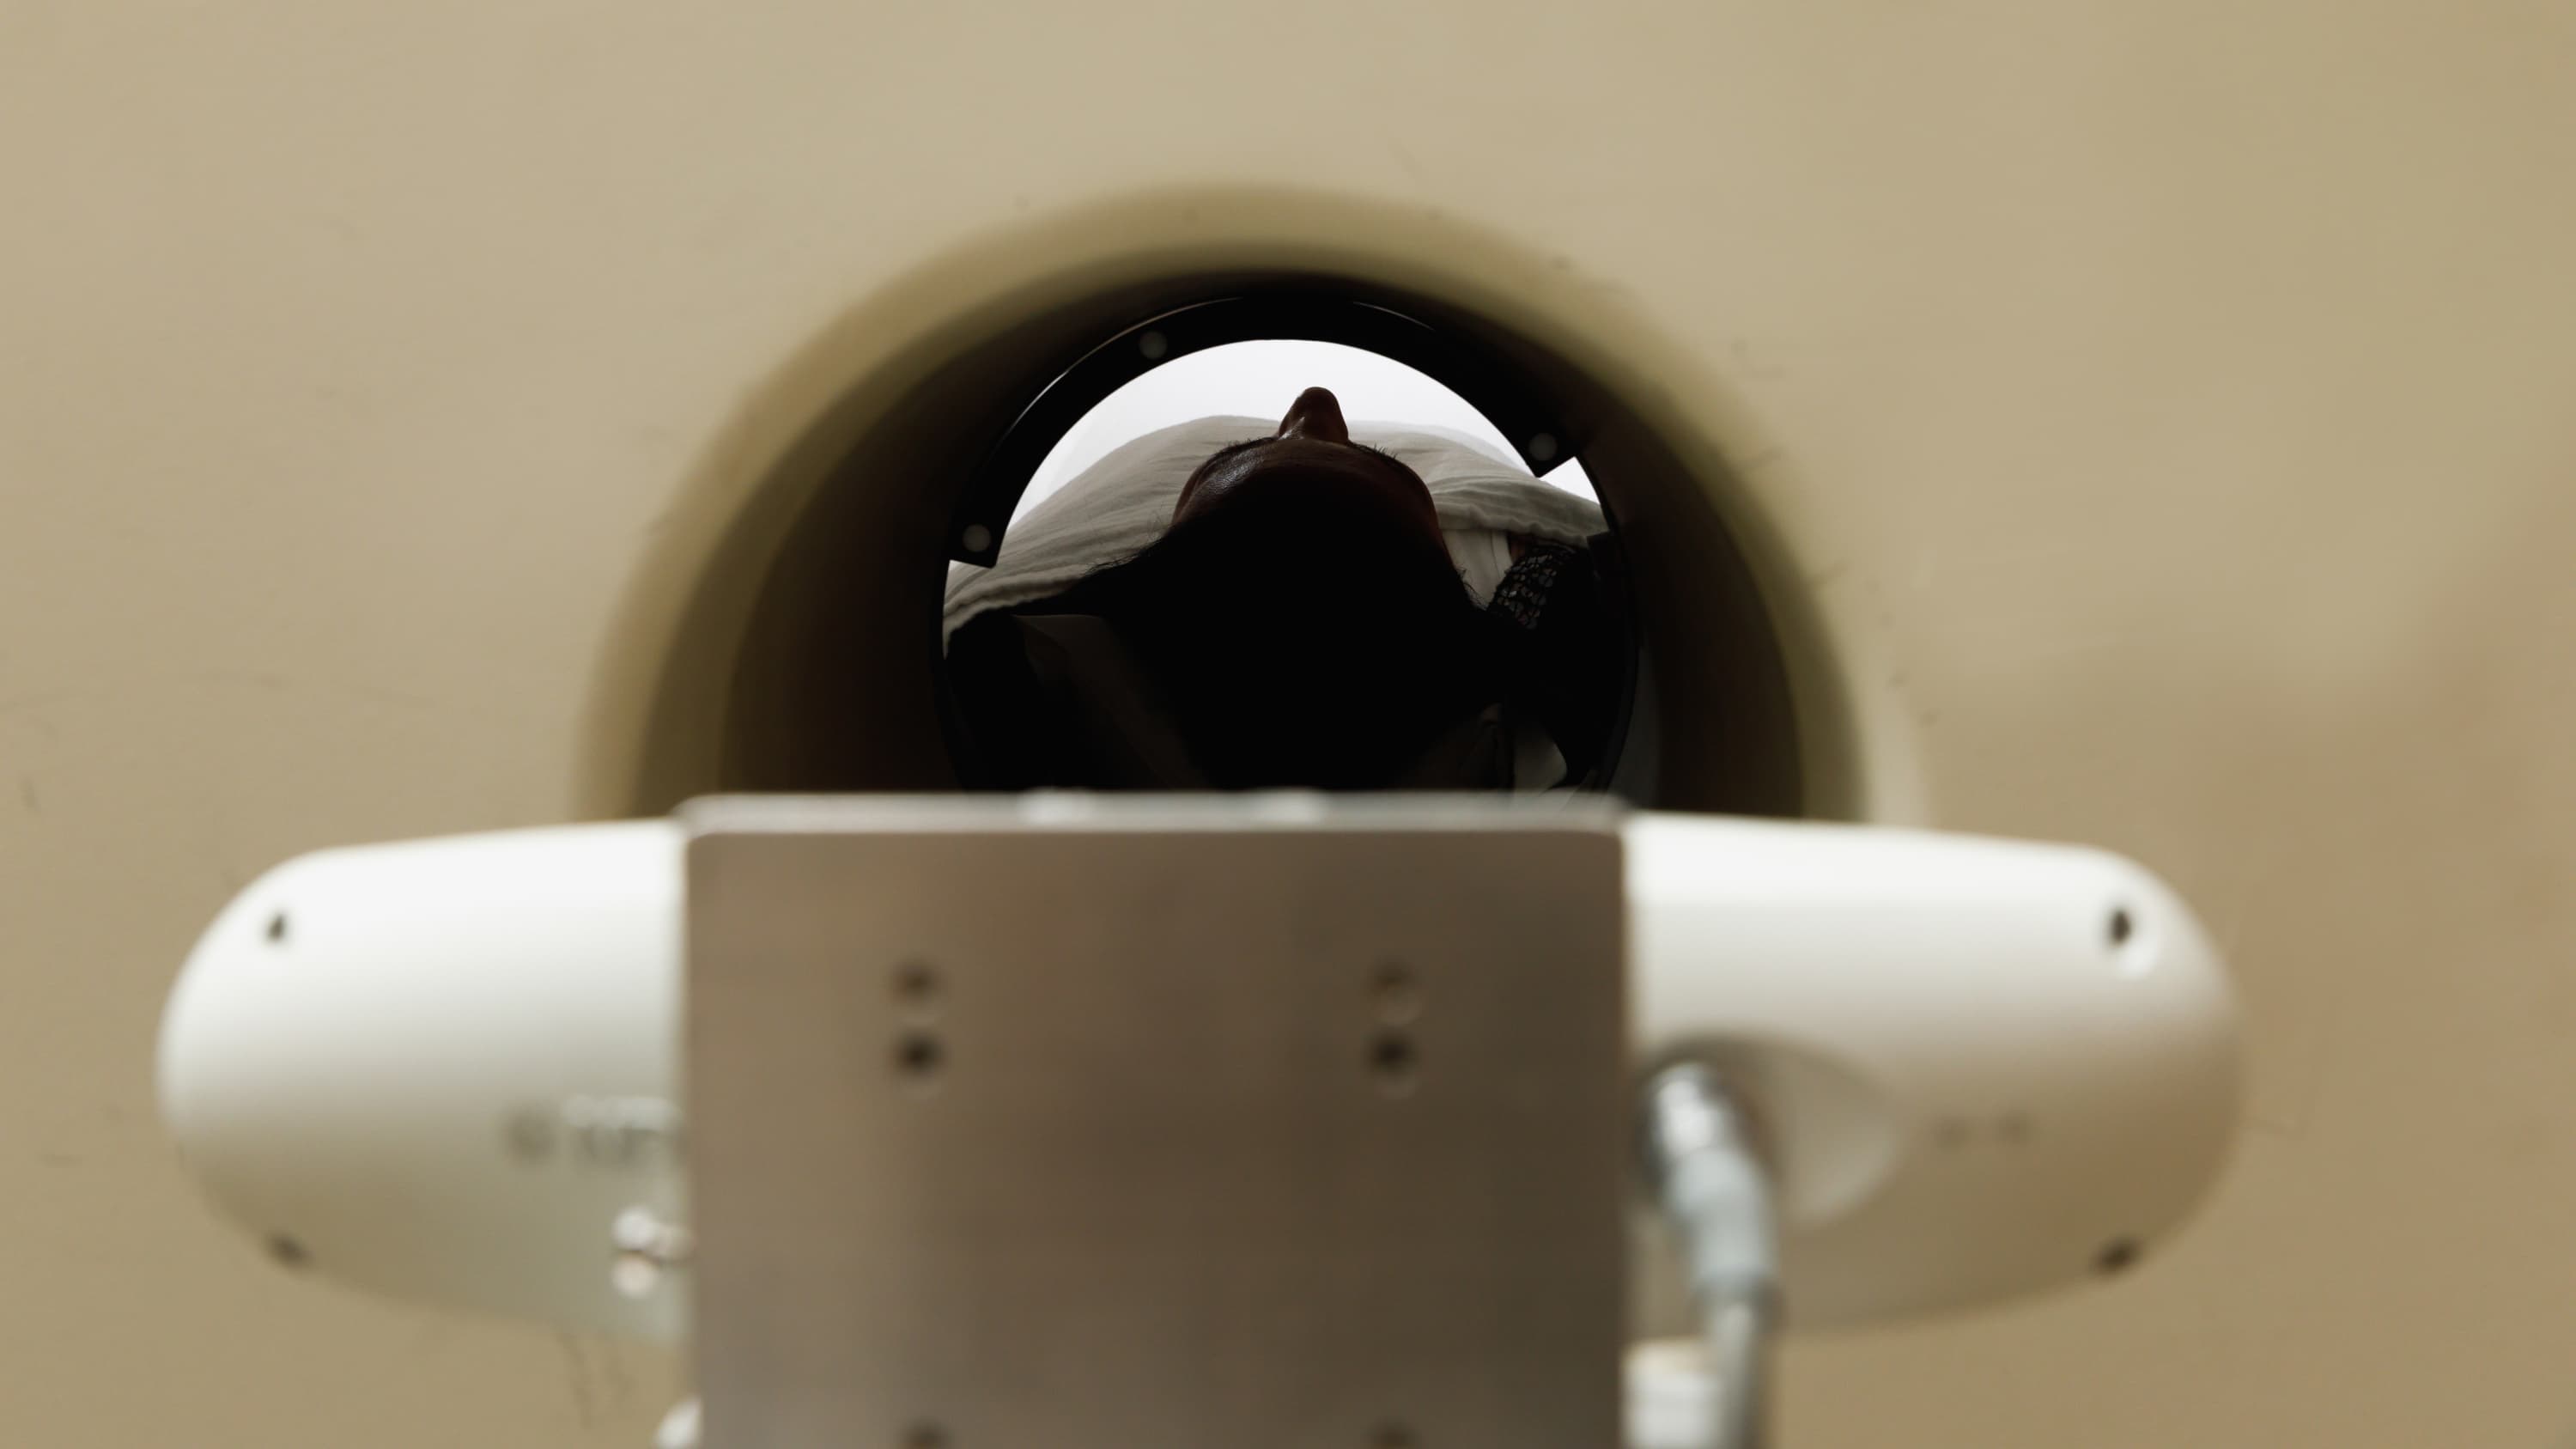 A close up of the patient in the MRI machine.